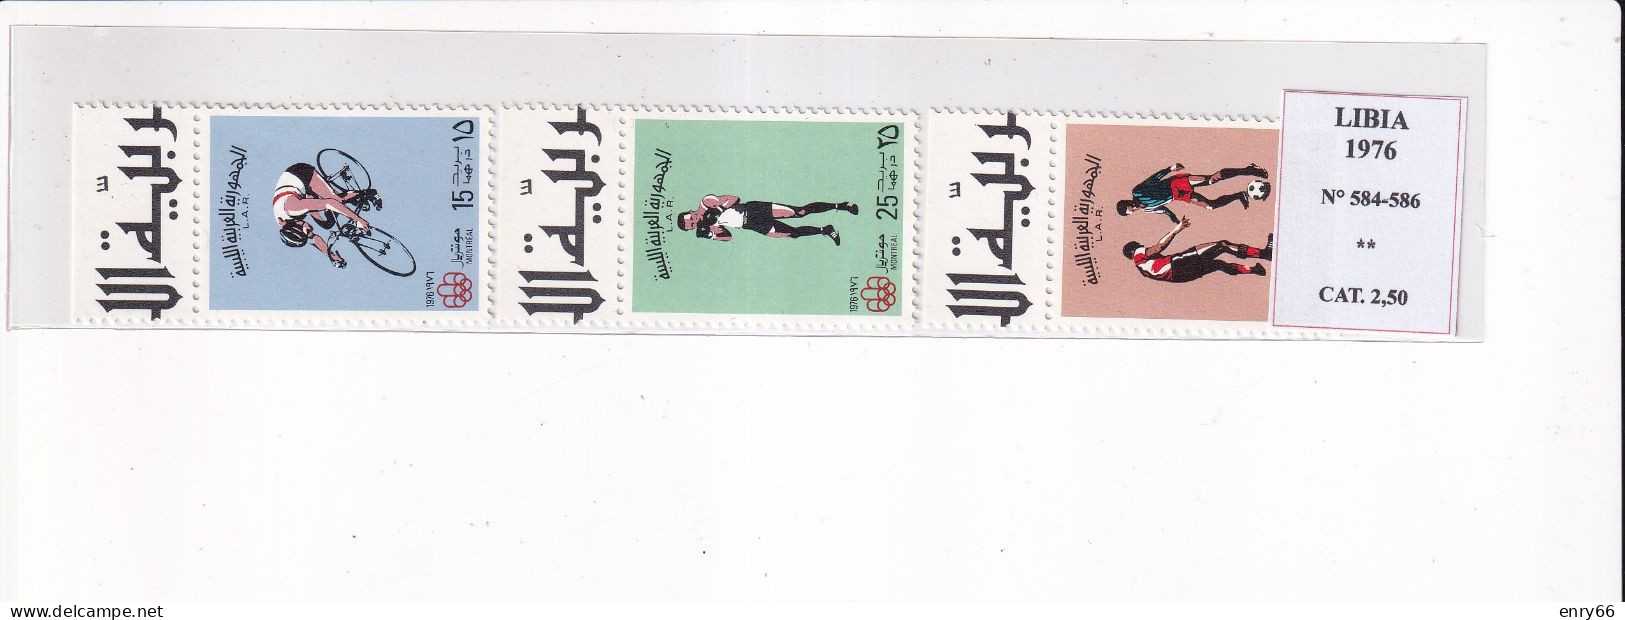 LIBIA 1976 N°584-586  MNH - Libia